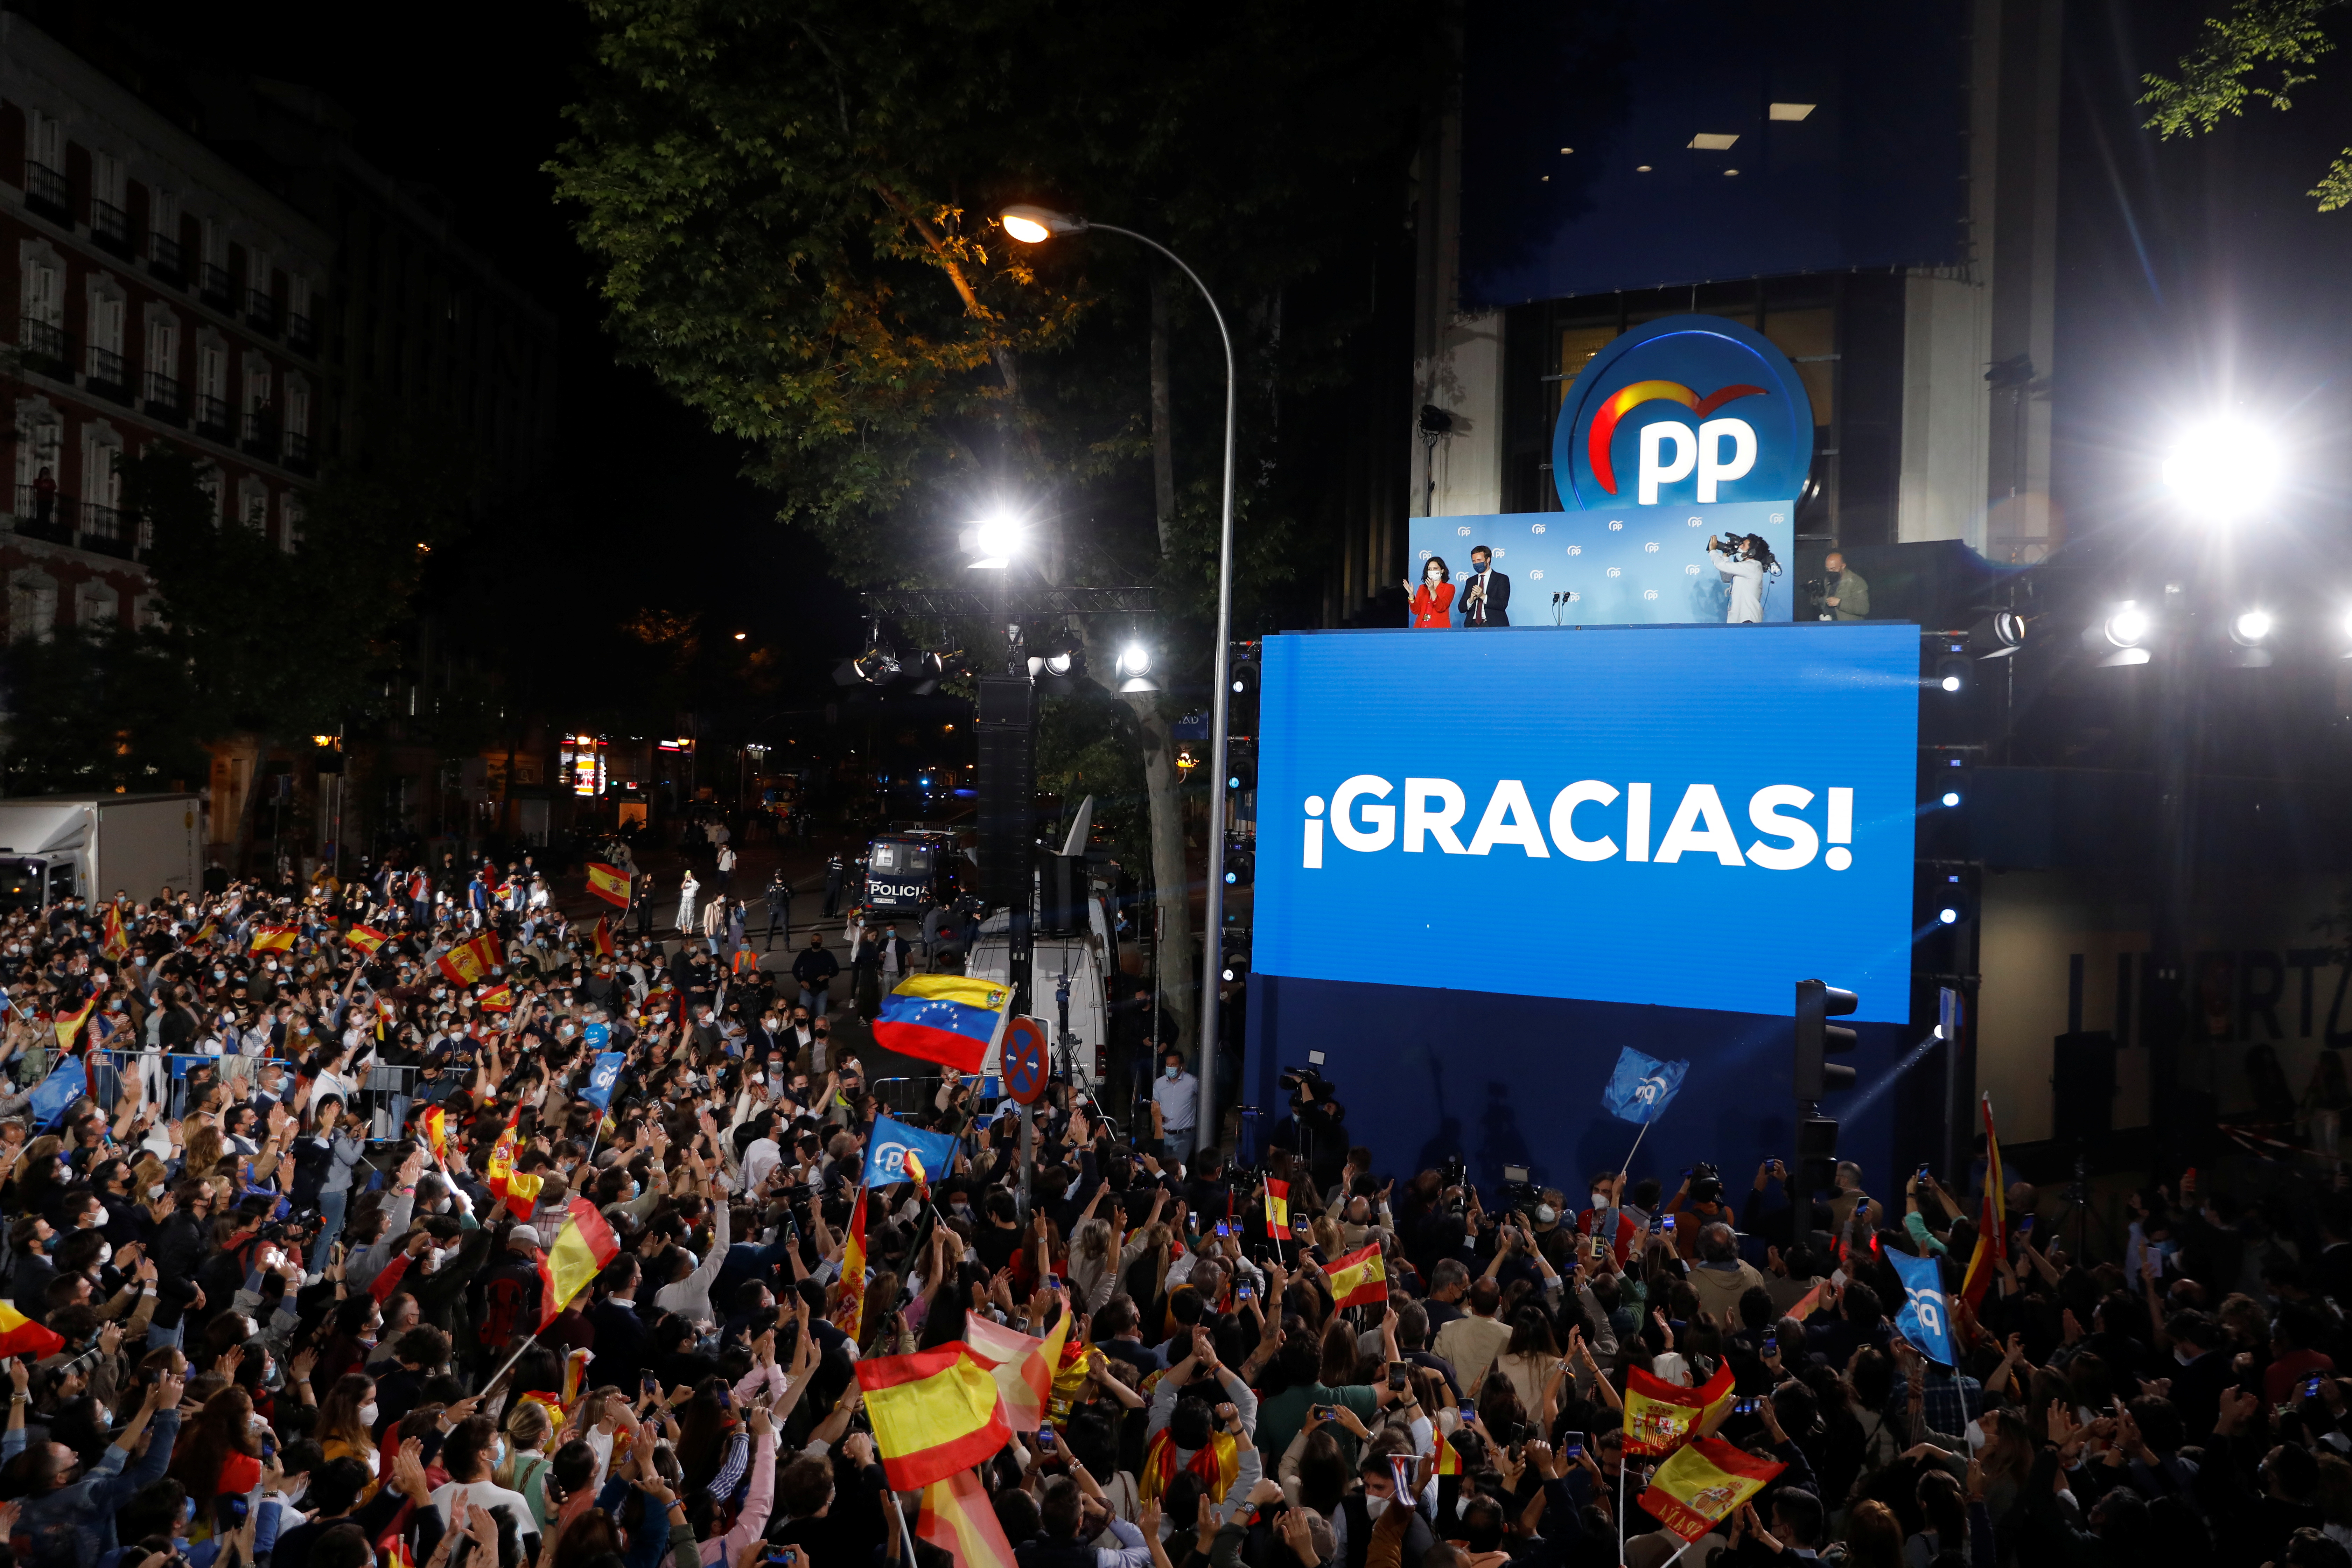 Madrid's regional election